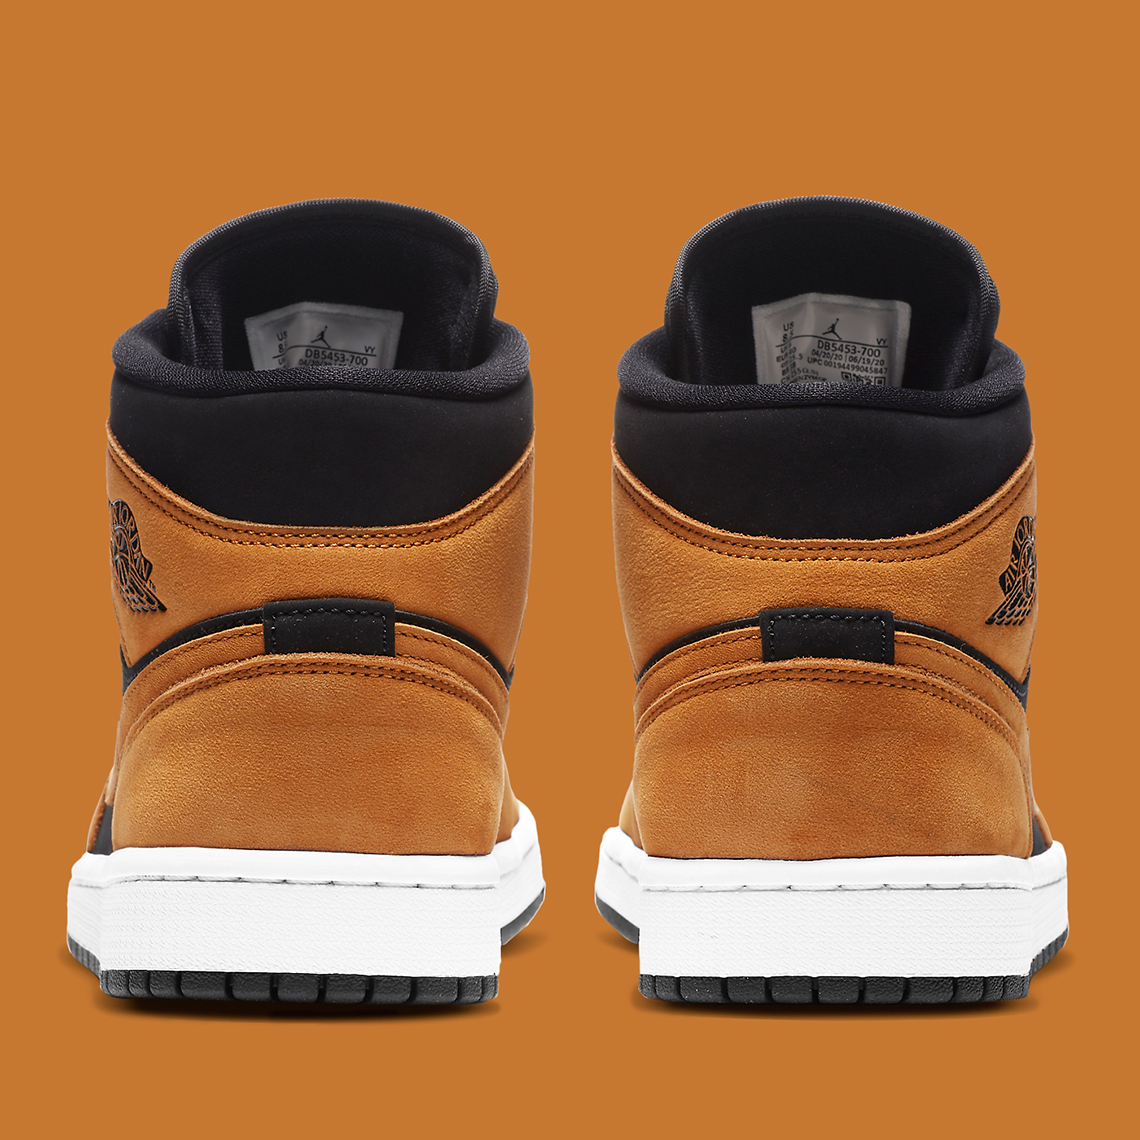 O Air Jordan 1 Mid Se Rendeu À Colorway ‘Wheat’ | SneakersBR